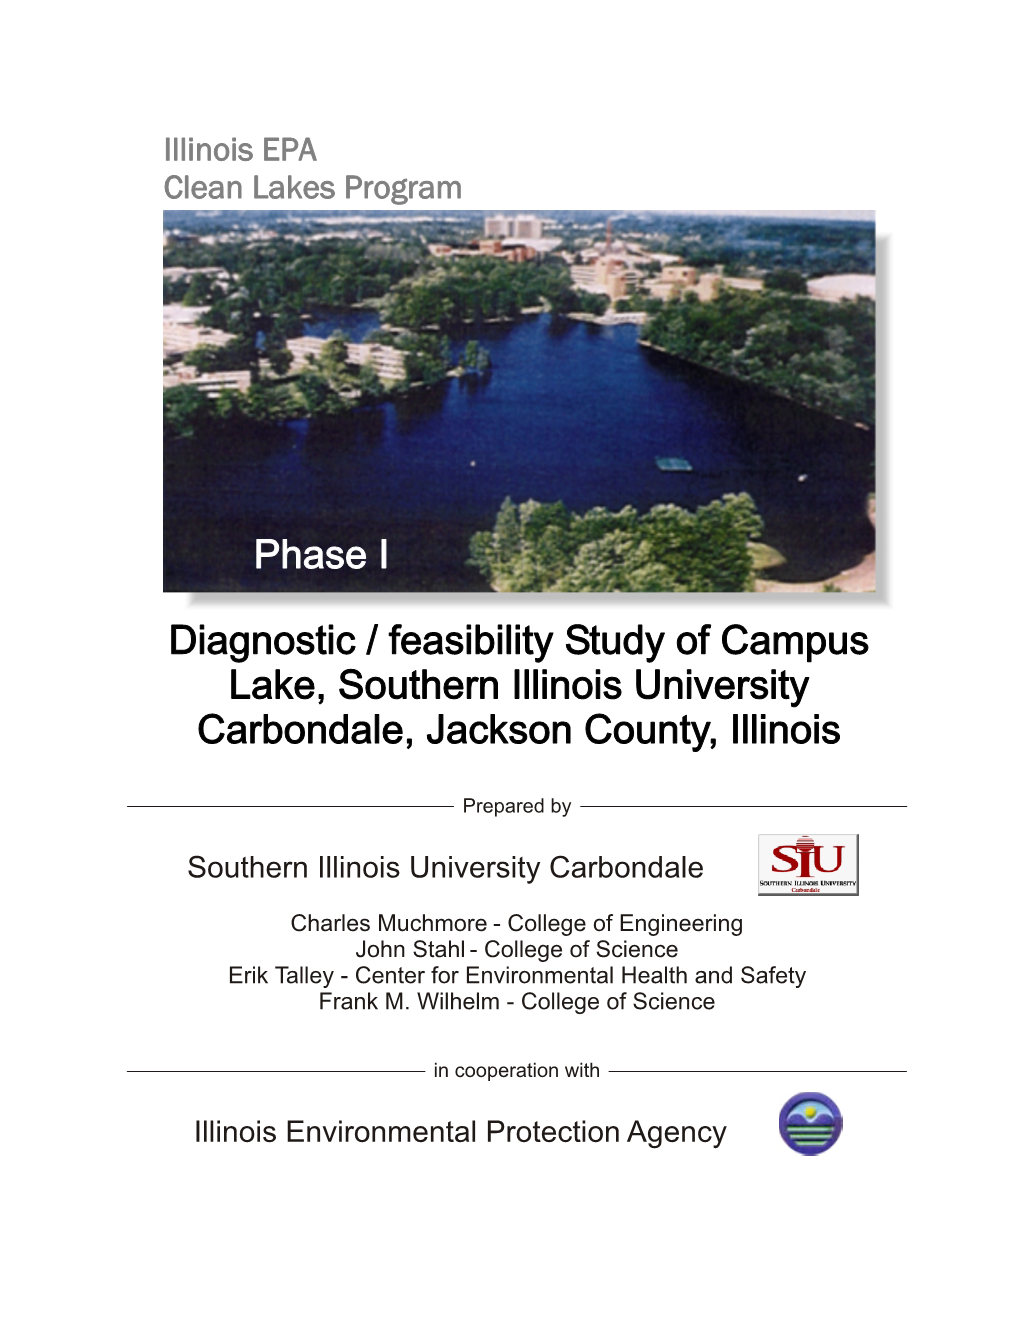 Phase I Diagnostic / Feasibility Study of Campus Lake, Southern Illinois